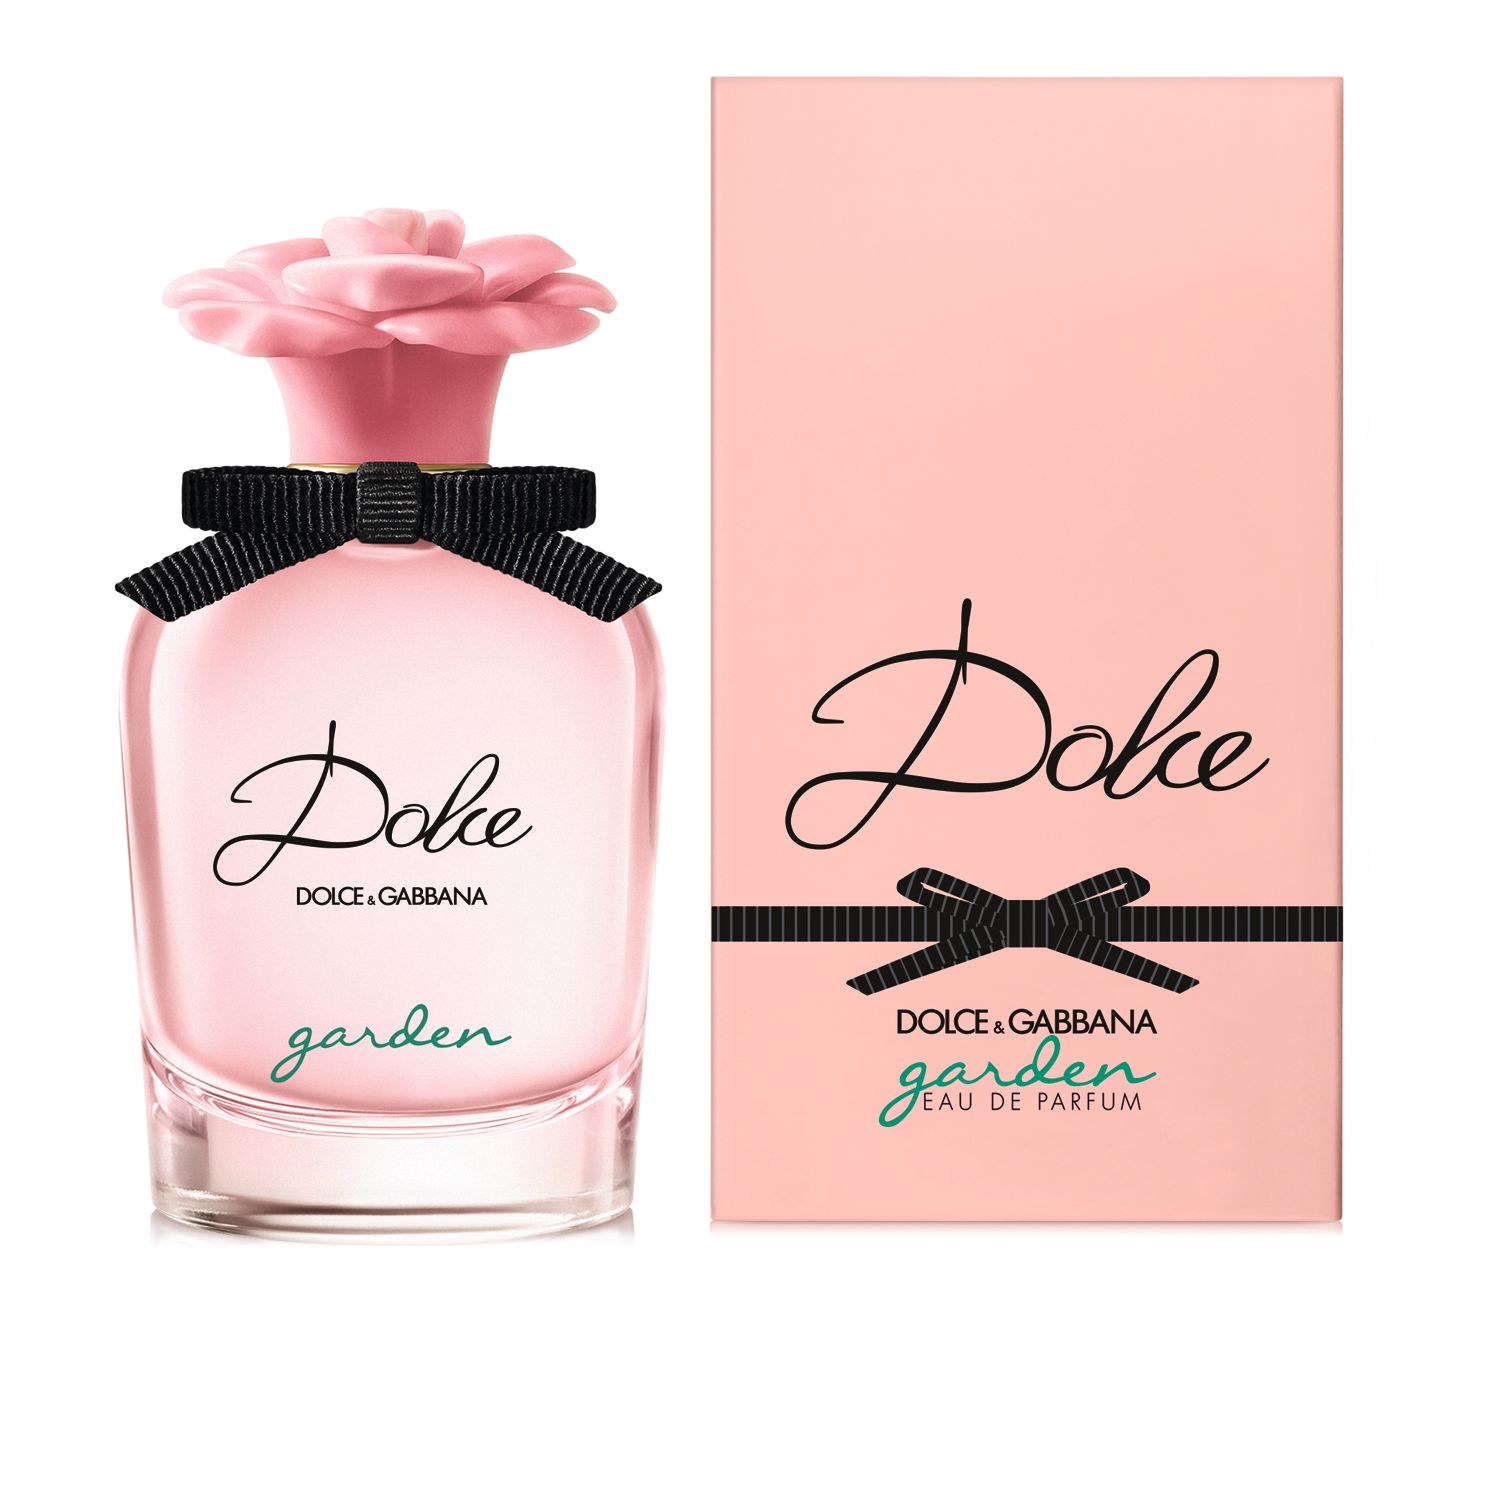 dolce and gabbana perfume near me